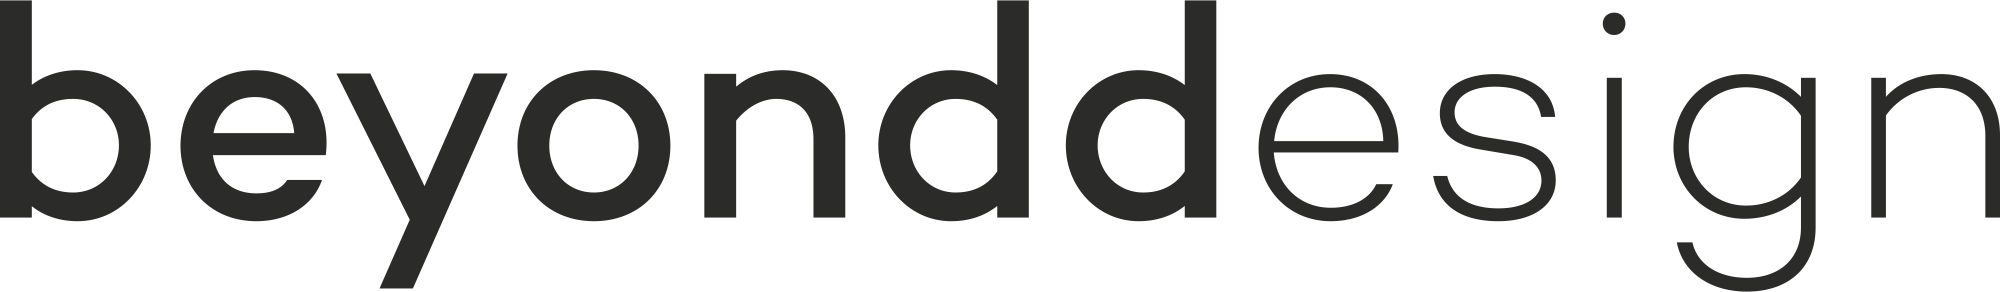 Beyond Design Logo